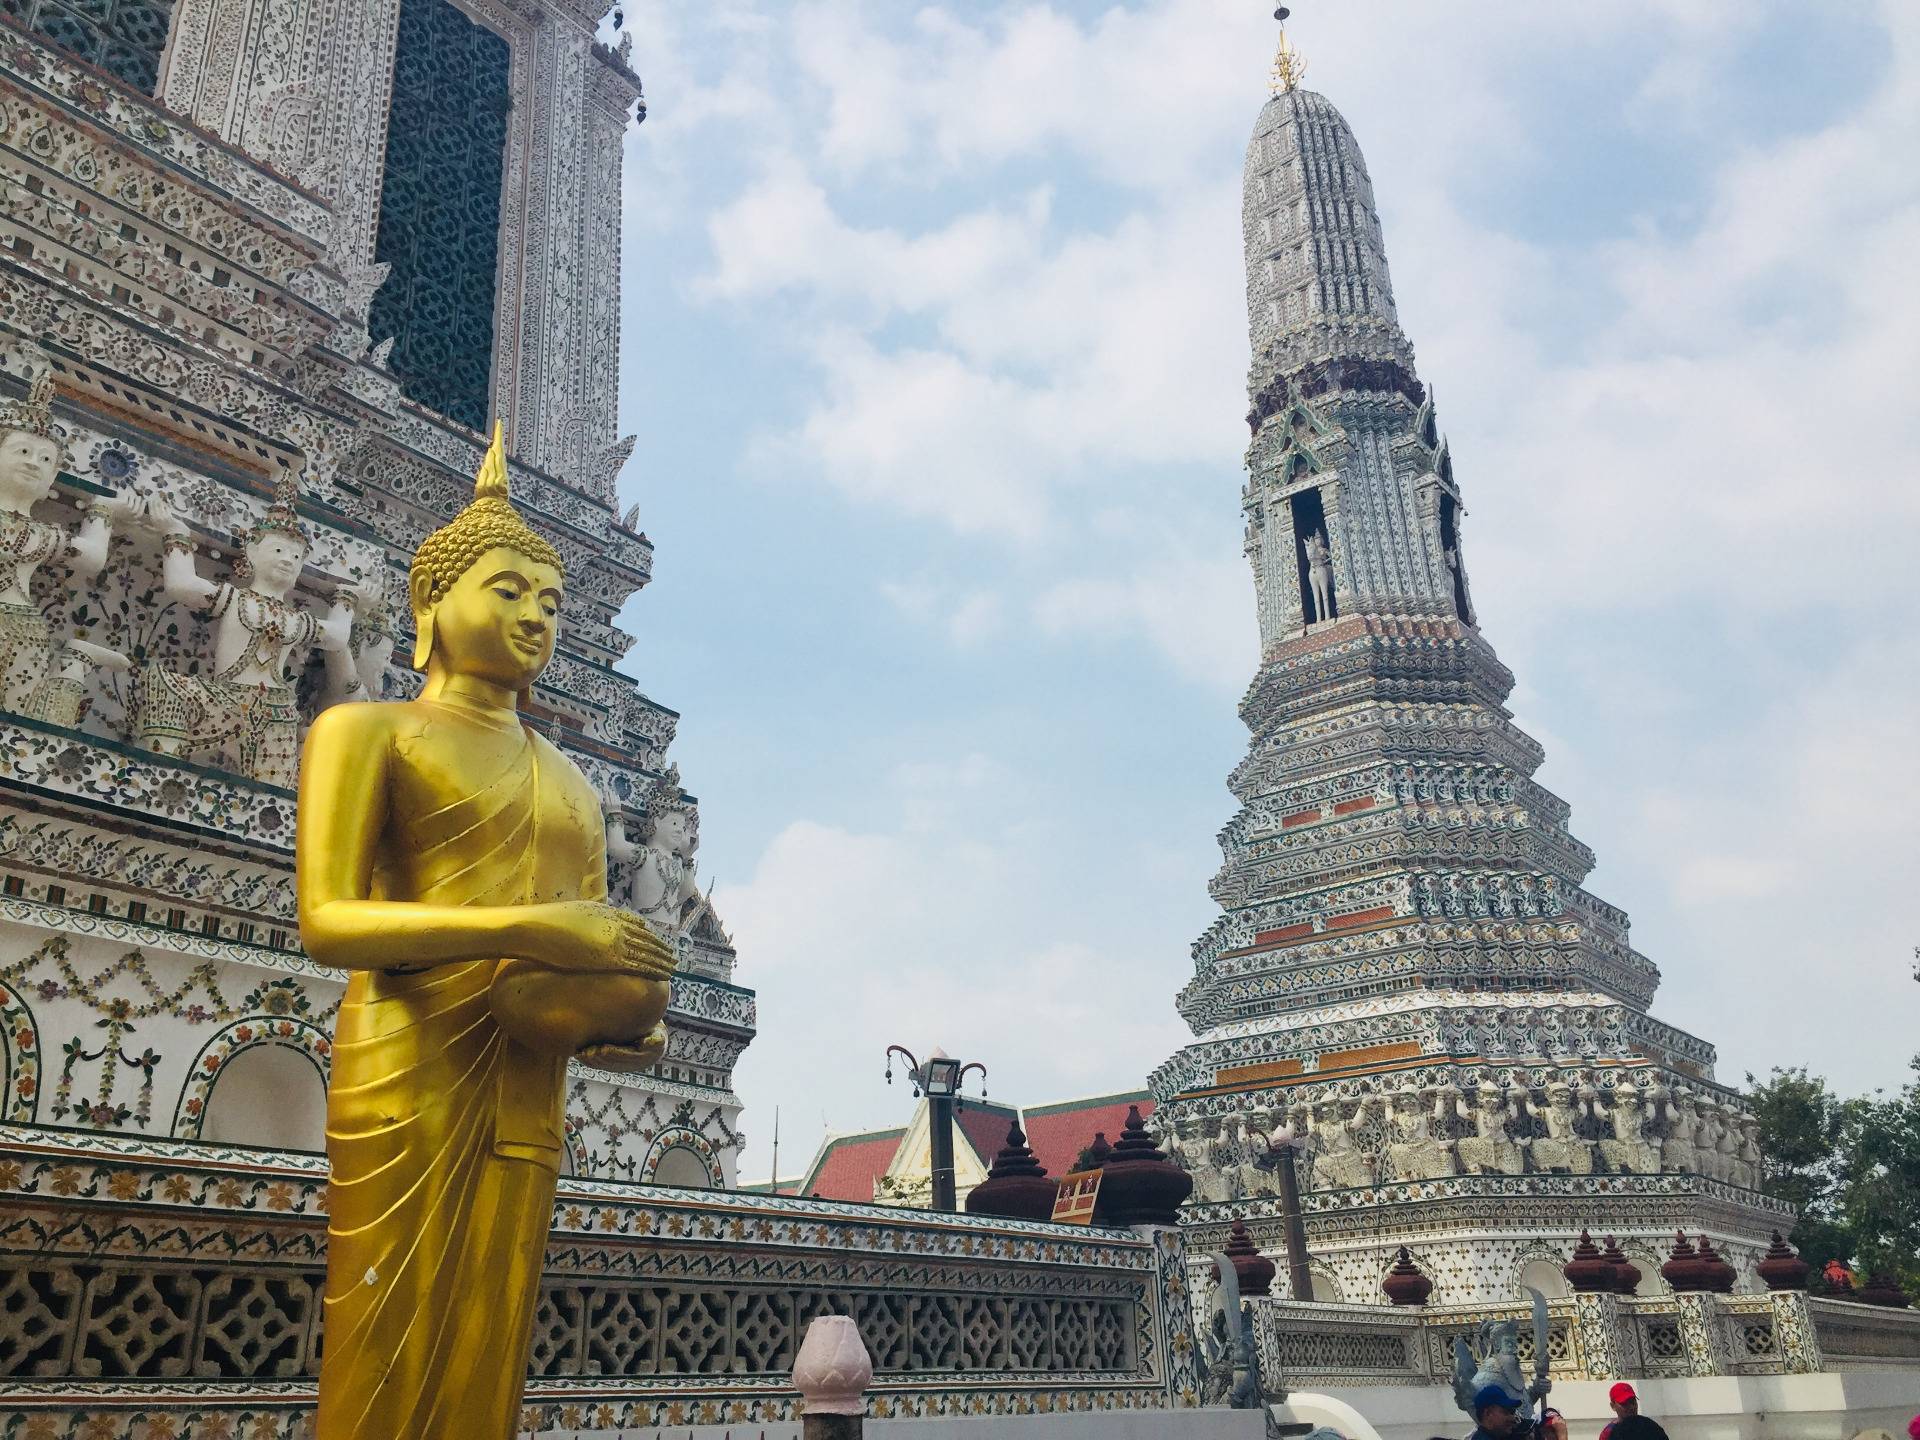 First Day in Bangkok: We visited Wat Arun